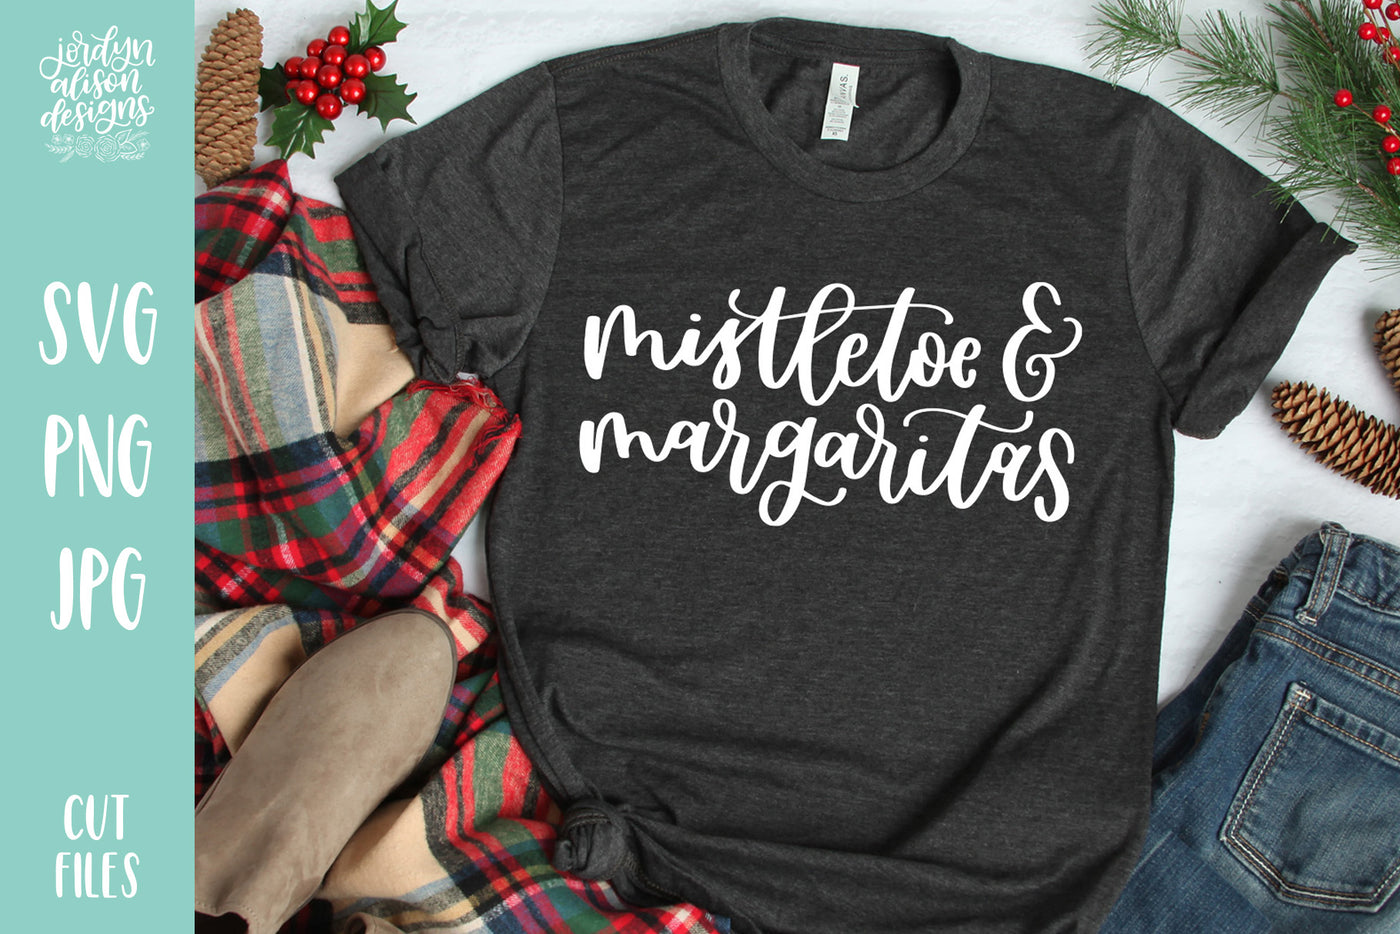 Grey T-Shirt with Handwritten text "Mistletoe & Margaritas" in white letters